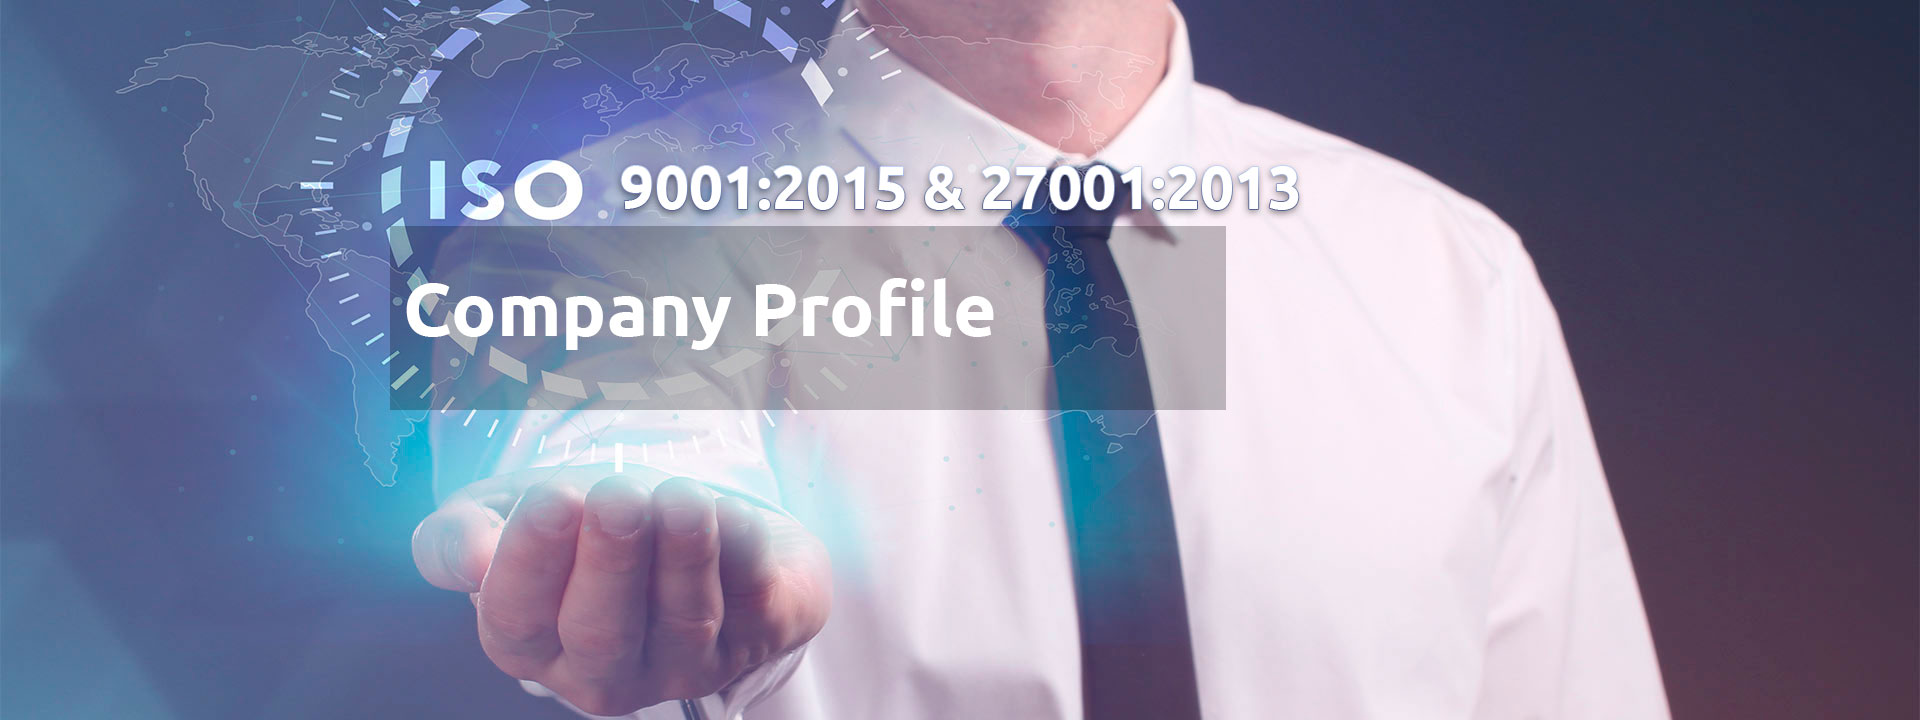 Company Profile - ISO 9001:2015 & 27001:2013